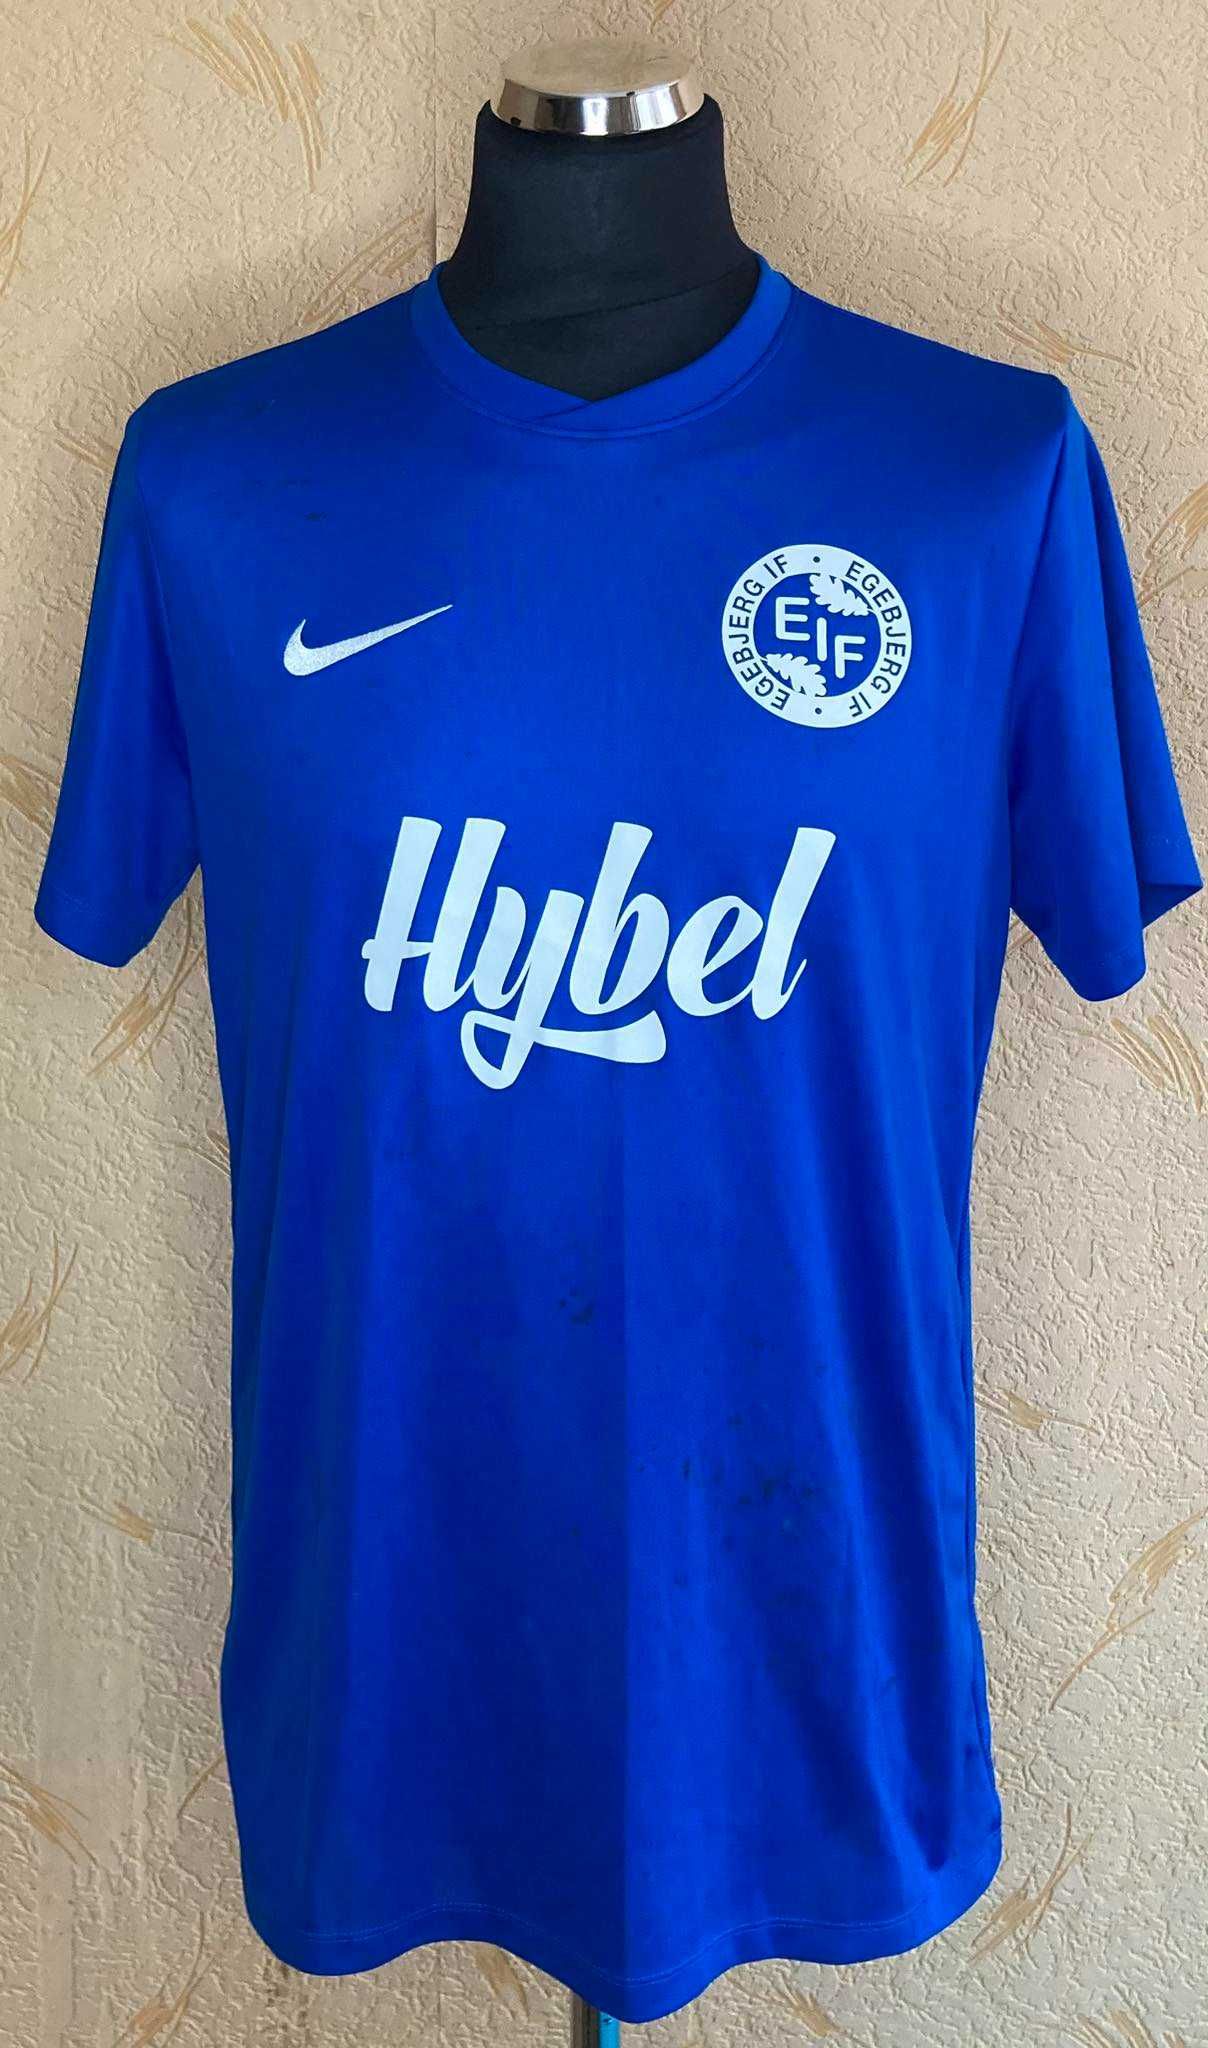 Koszulka Sportowa Egebjerg IF Steenbjerg 55 Nike roz. L